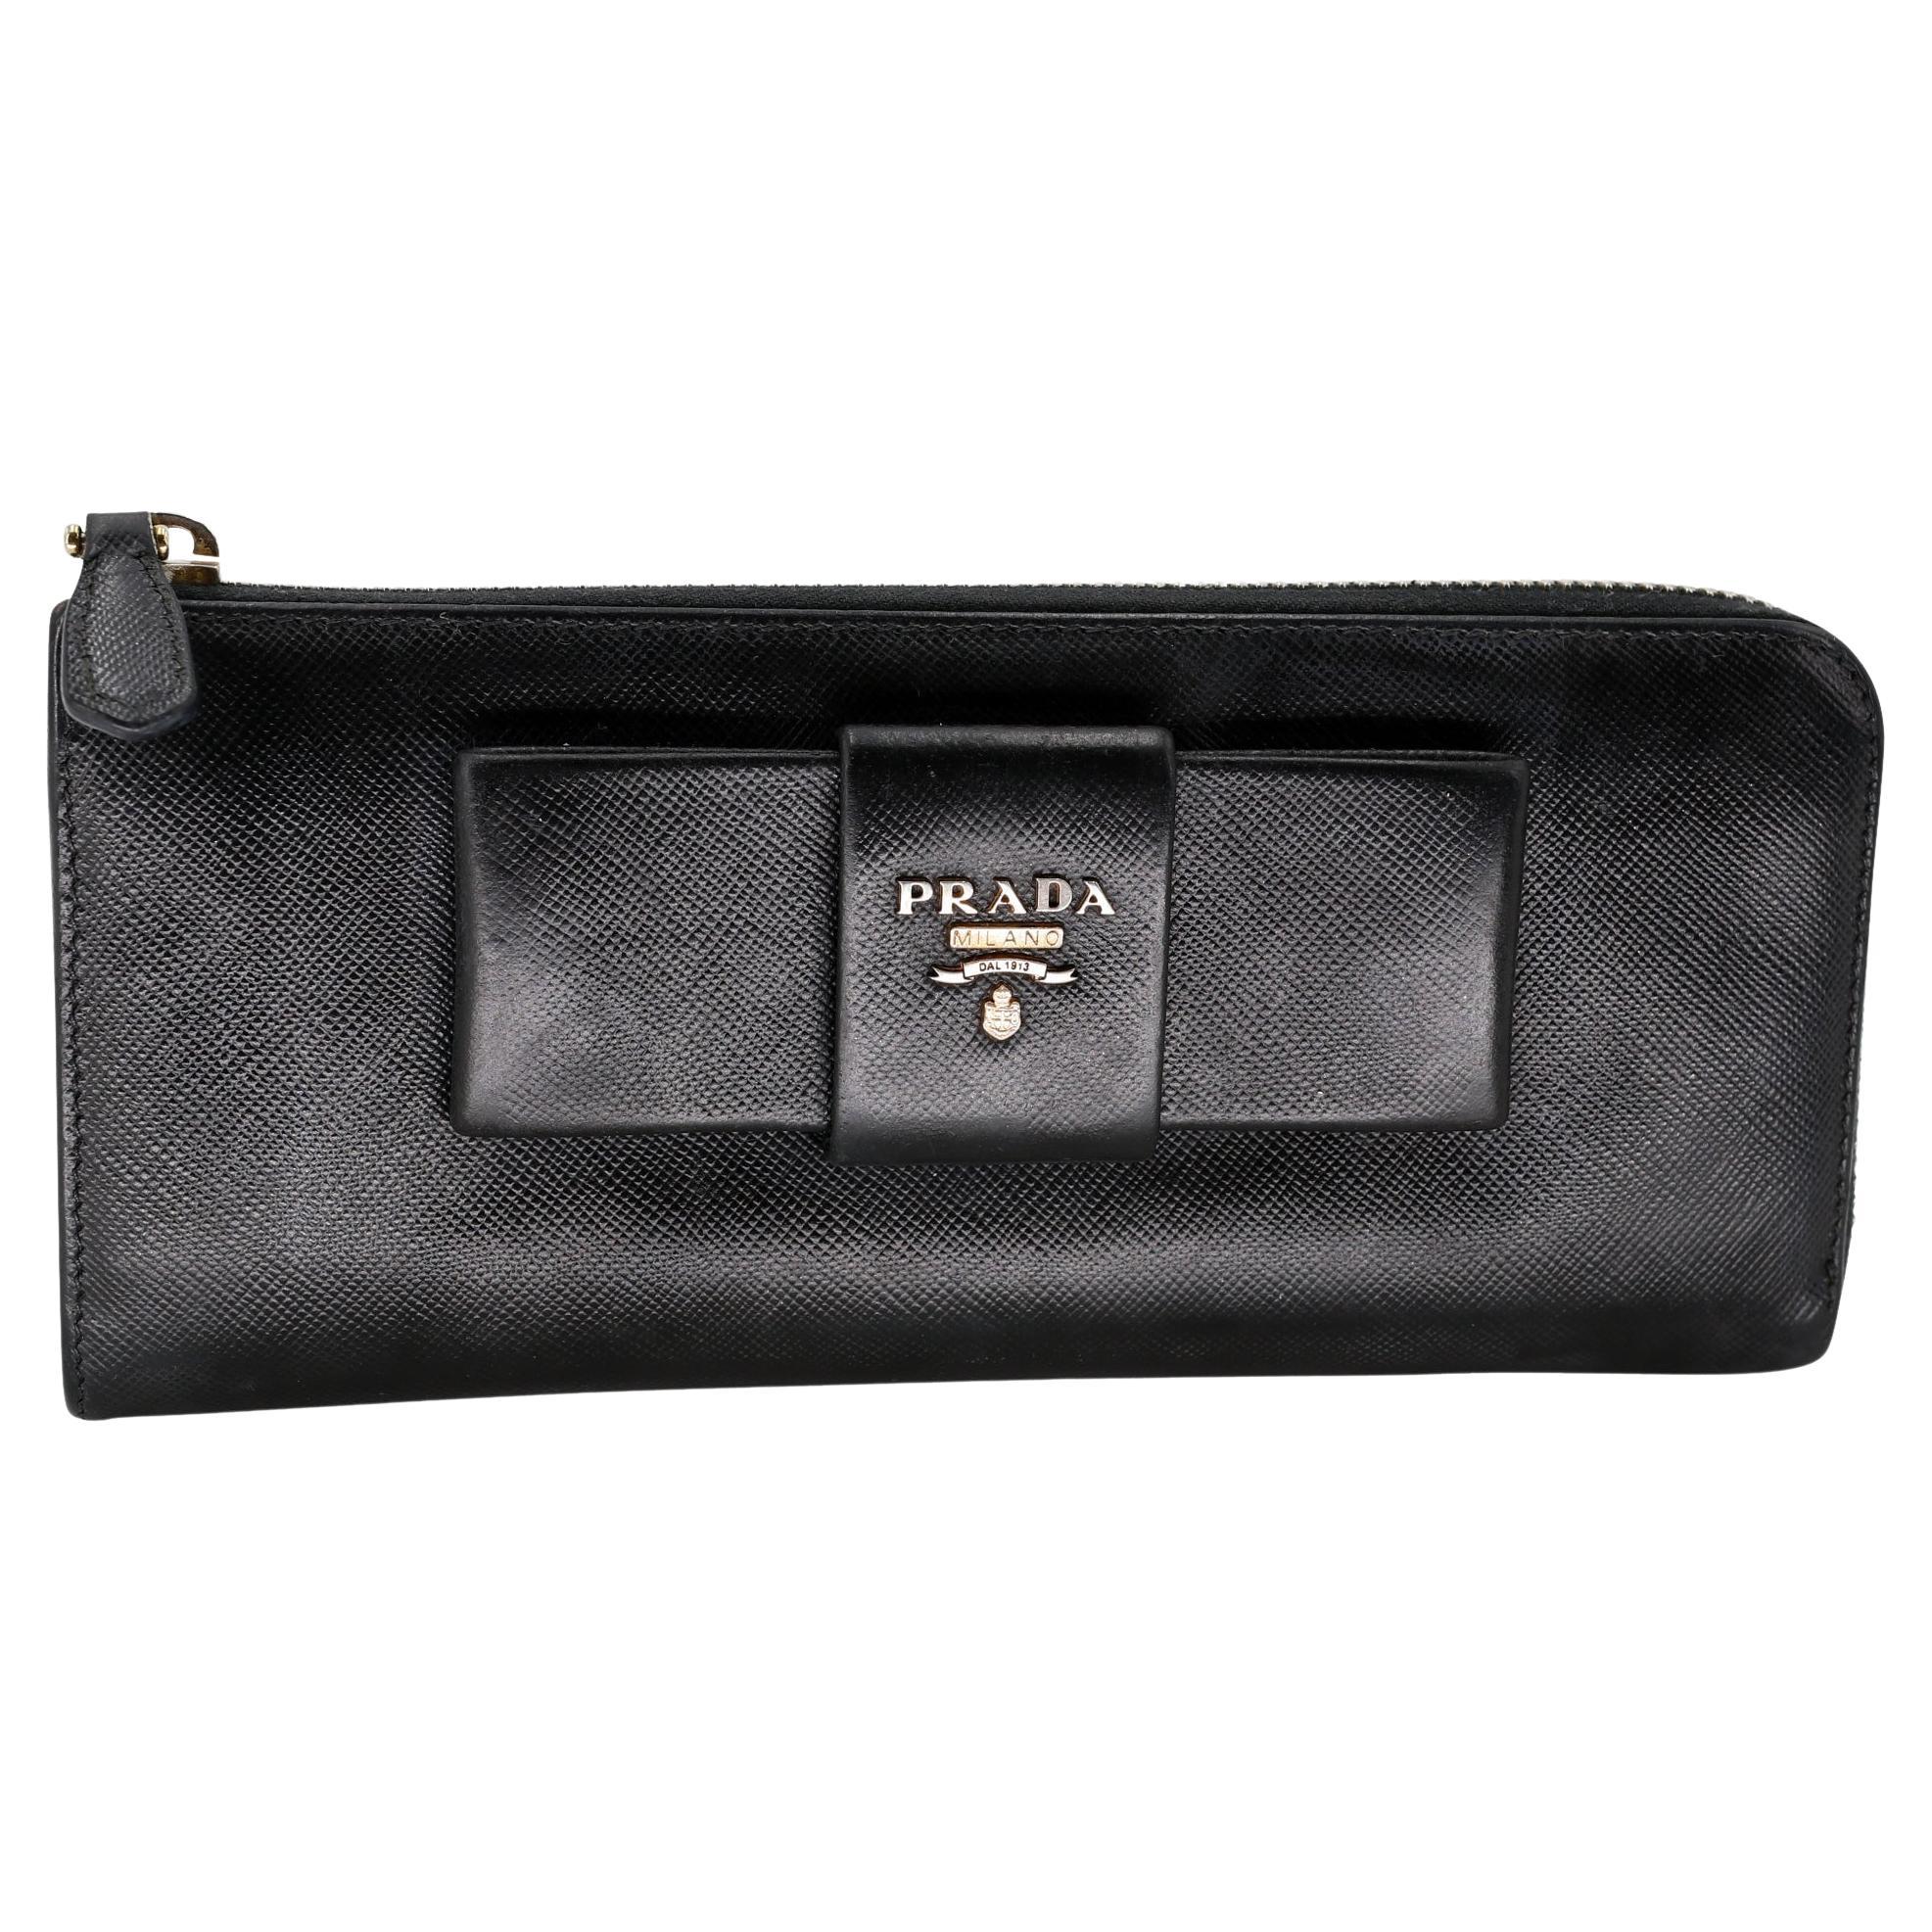 Prada Saffiano Peonia Fiocco Bow Zip Around Black Wallet PR-W1017P-A002 For Sale